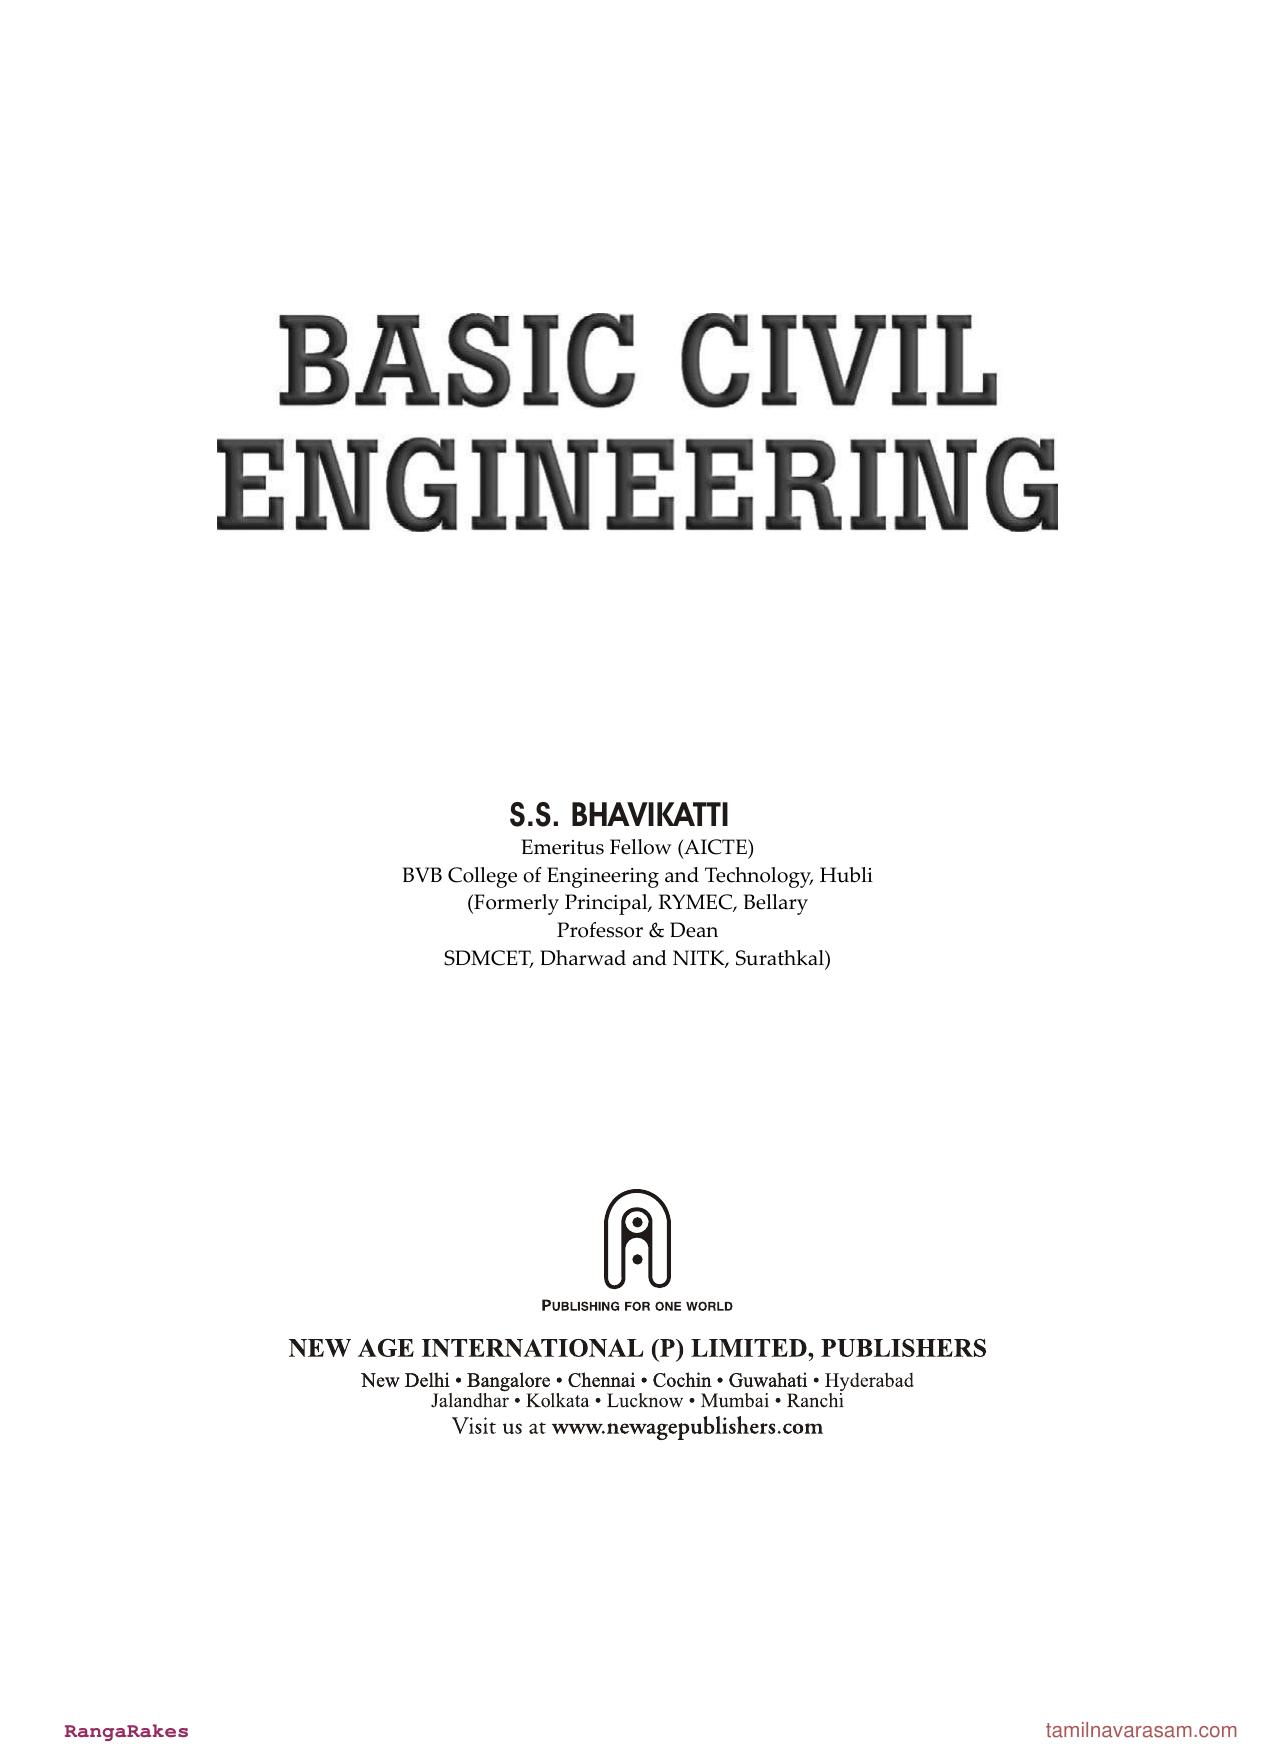 Basic Civil Engineering (Book) ( PDFDrive.com )